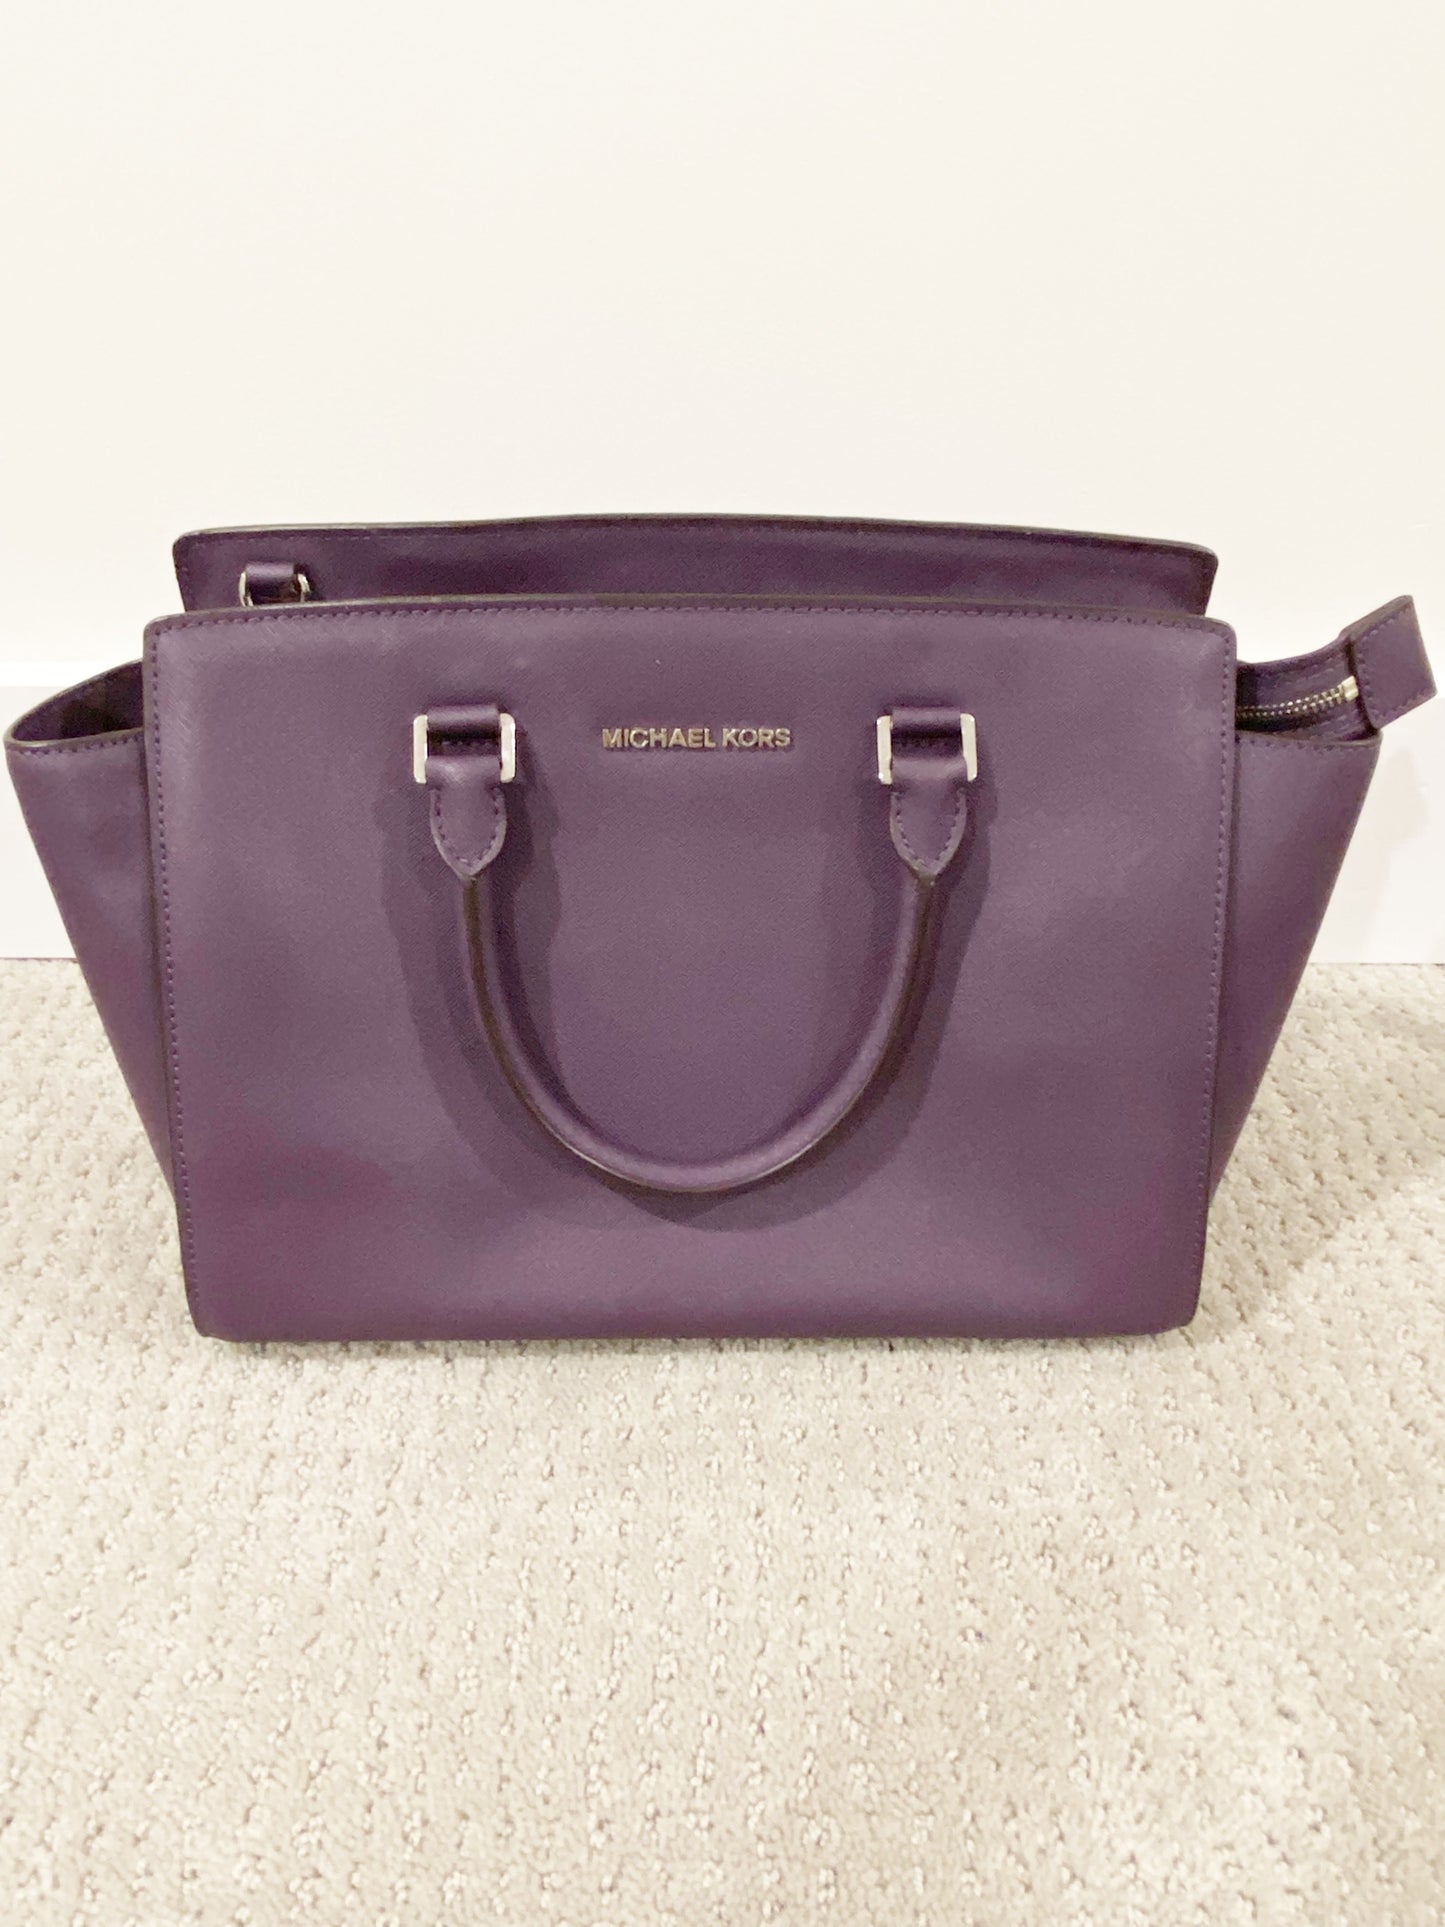 Michael Kors Deep Purple Handbag